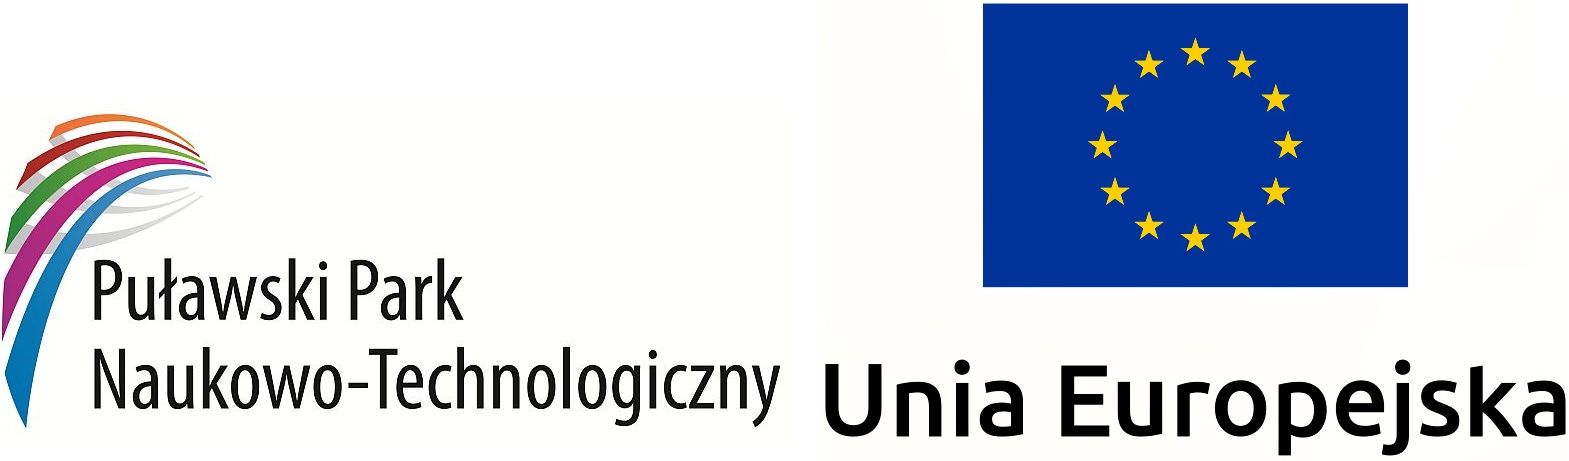 logoppnt+logo_UE_rgb-1